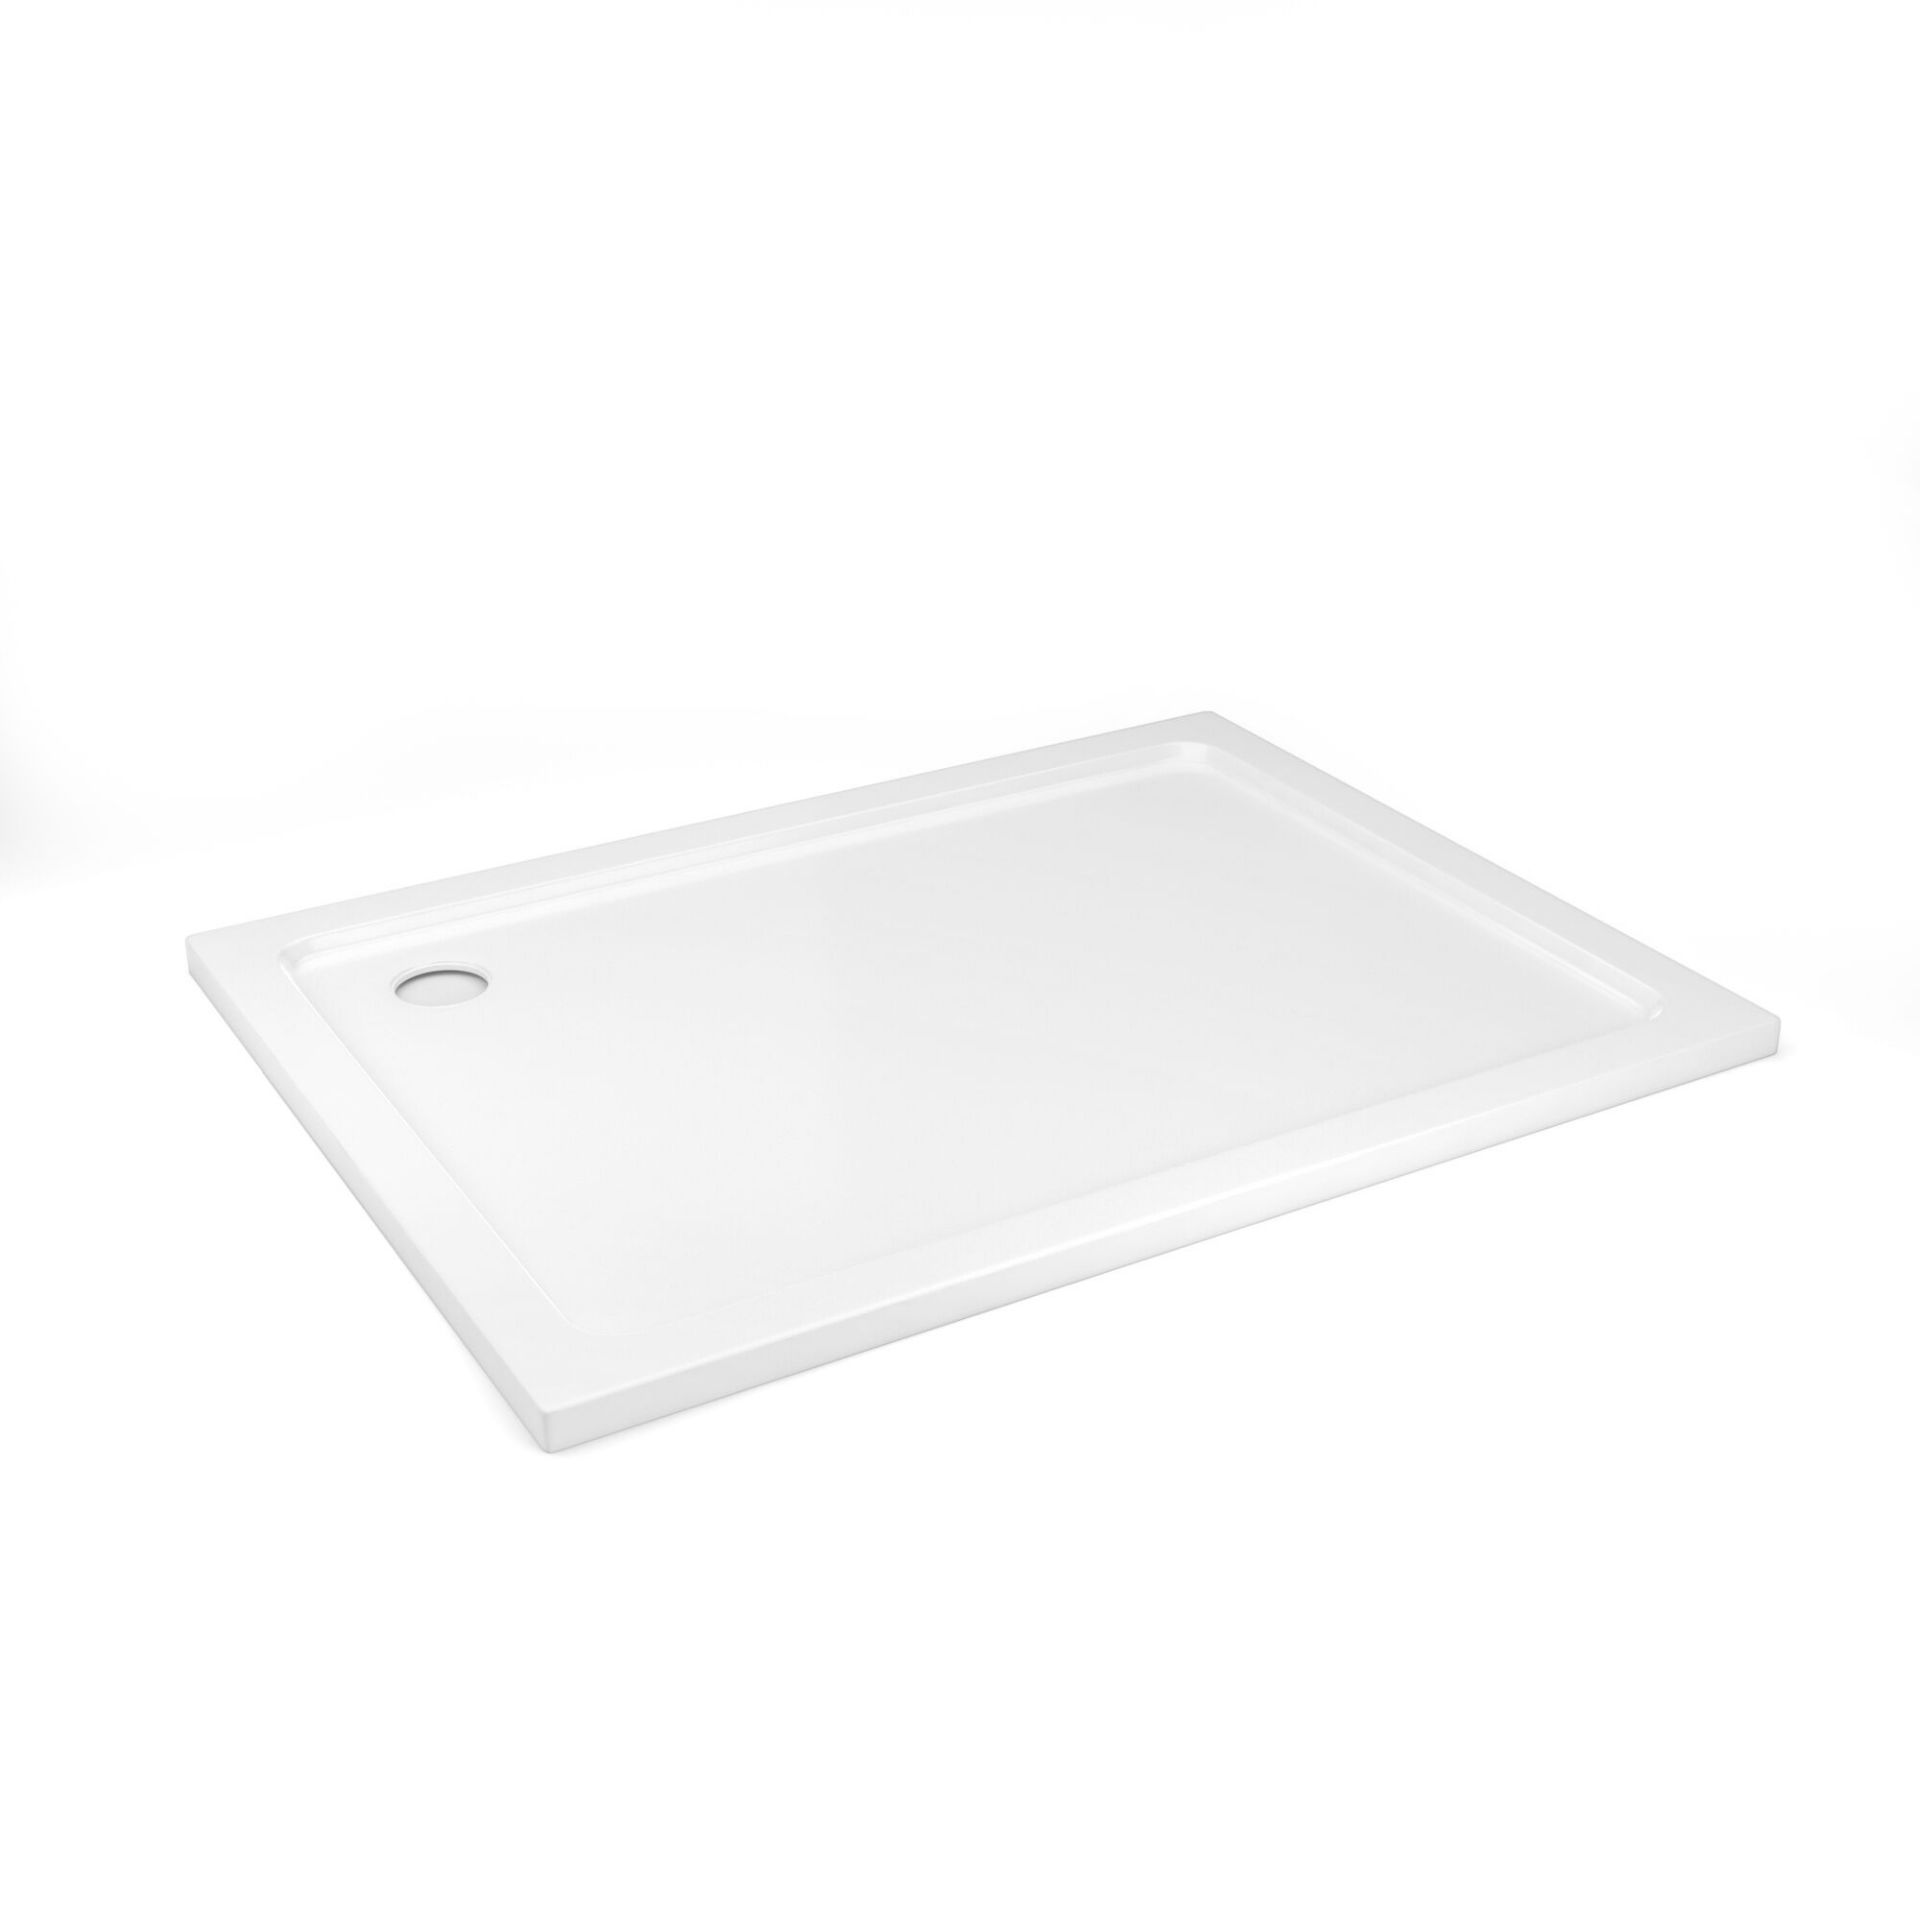 (XL109) 1200x900mm Rectangular Ultra Slim Stone Shower Tray. Low profile ultra slim design G... - Image 2 of 2